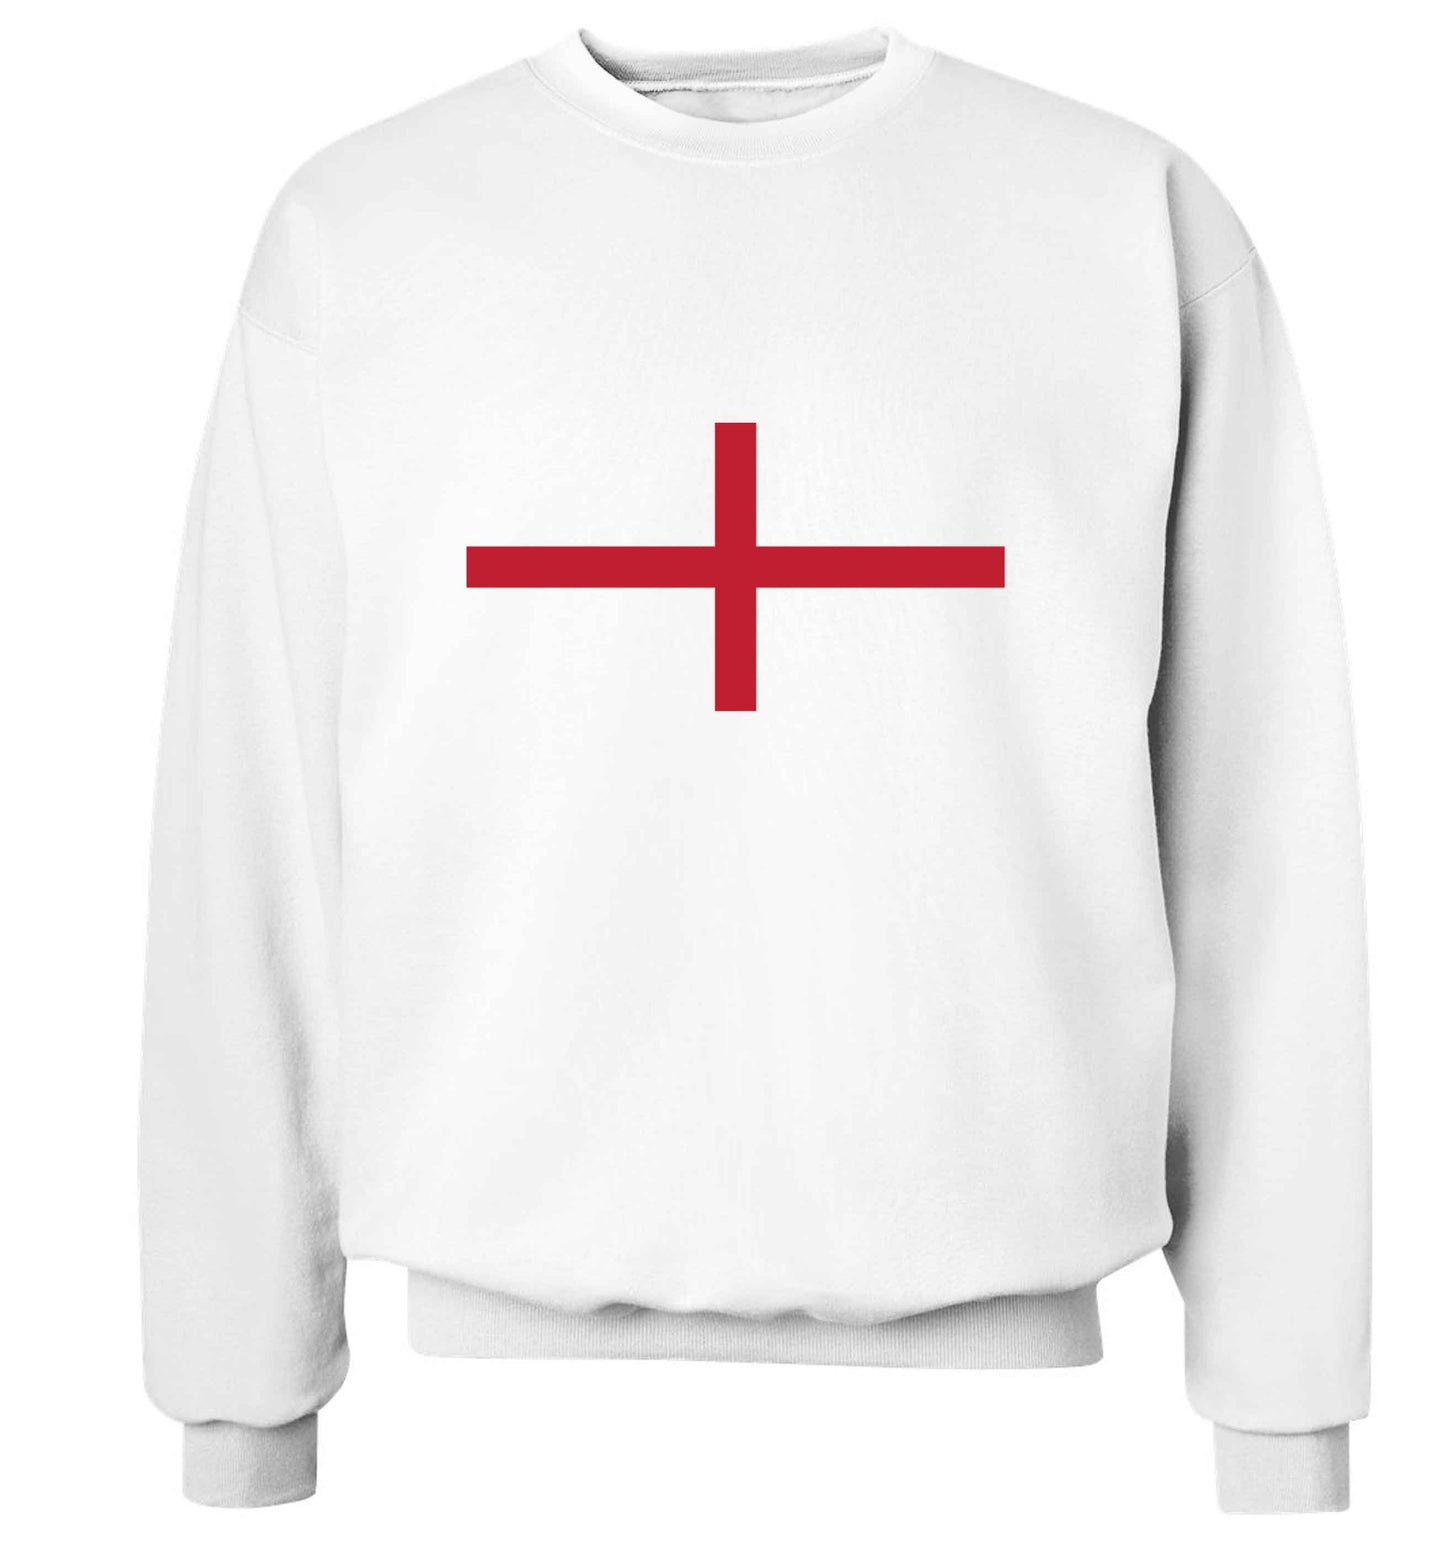 England Flag adult's unisex white sweater 2XL